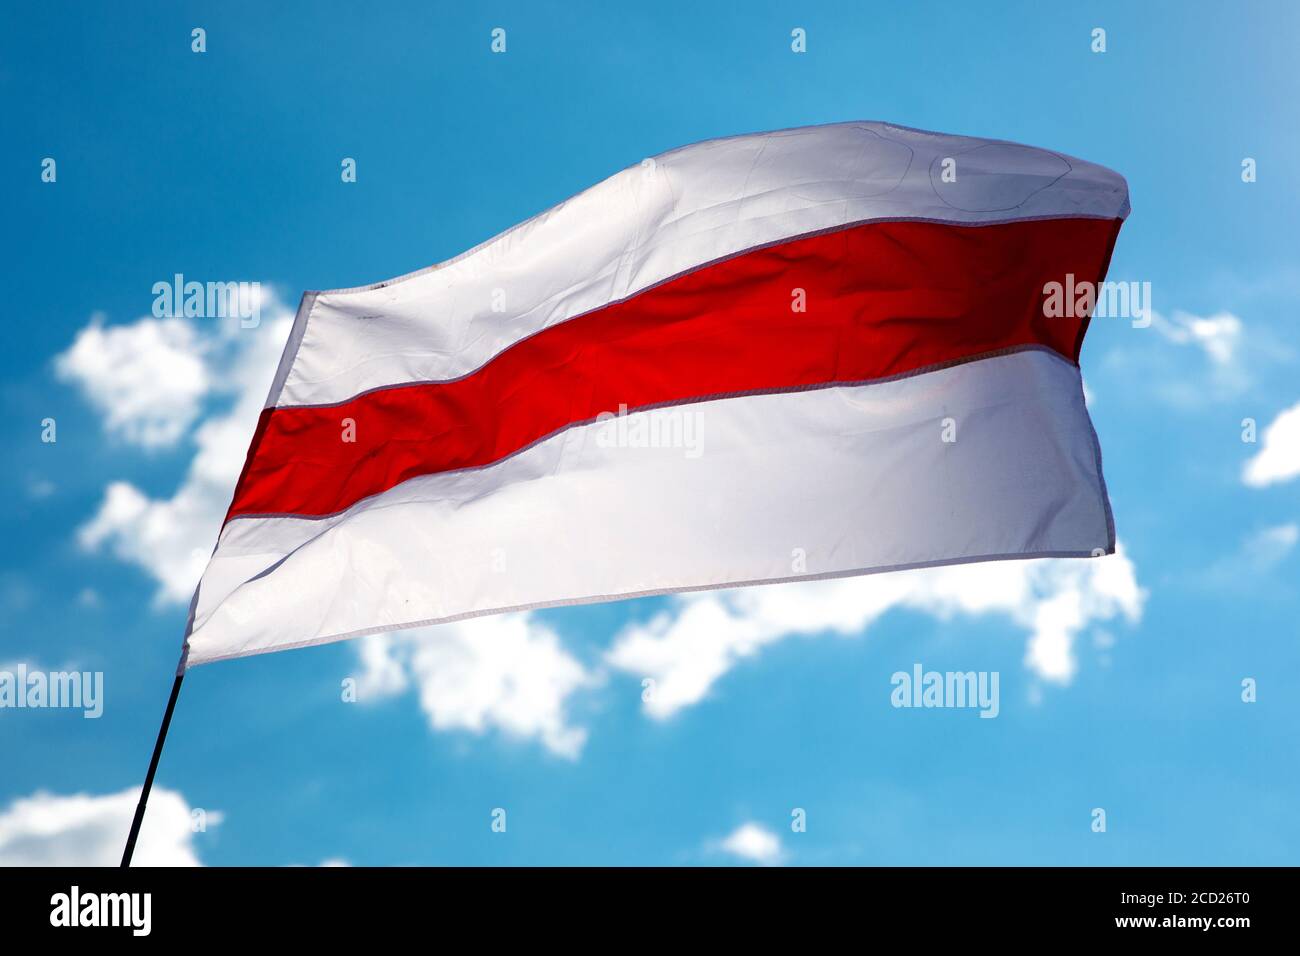 Бело красно белый флаг в россии. Флаг Беларуси бело-красно-белый. Беларусь бело красно белый. Бело сине красный флаг Беларуси. Флаг Белоруссии бело красно белый.